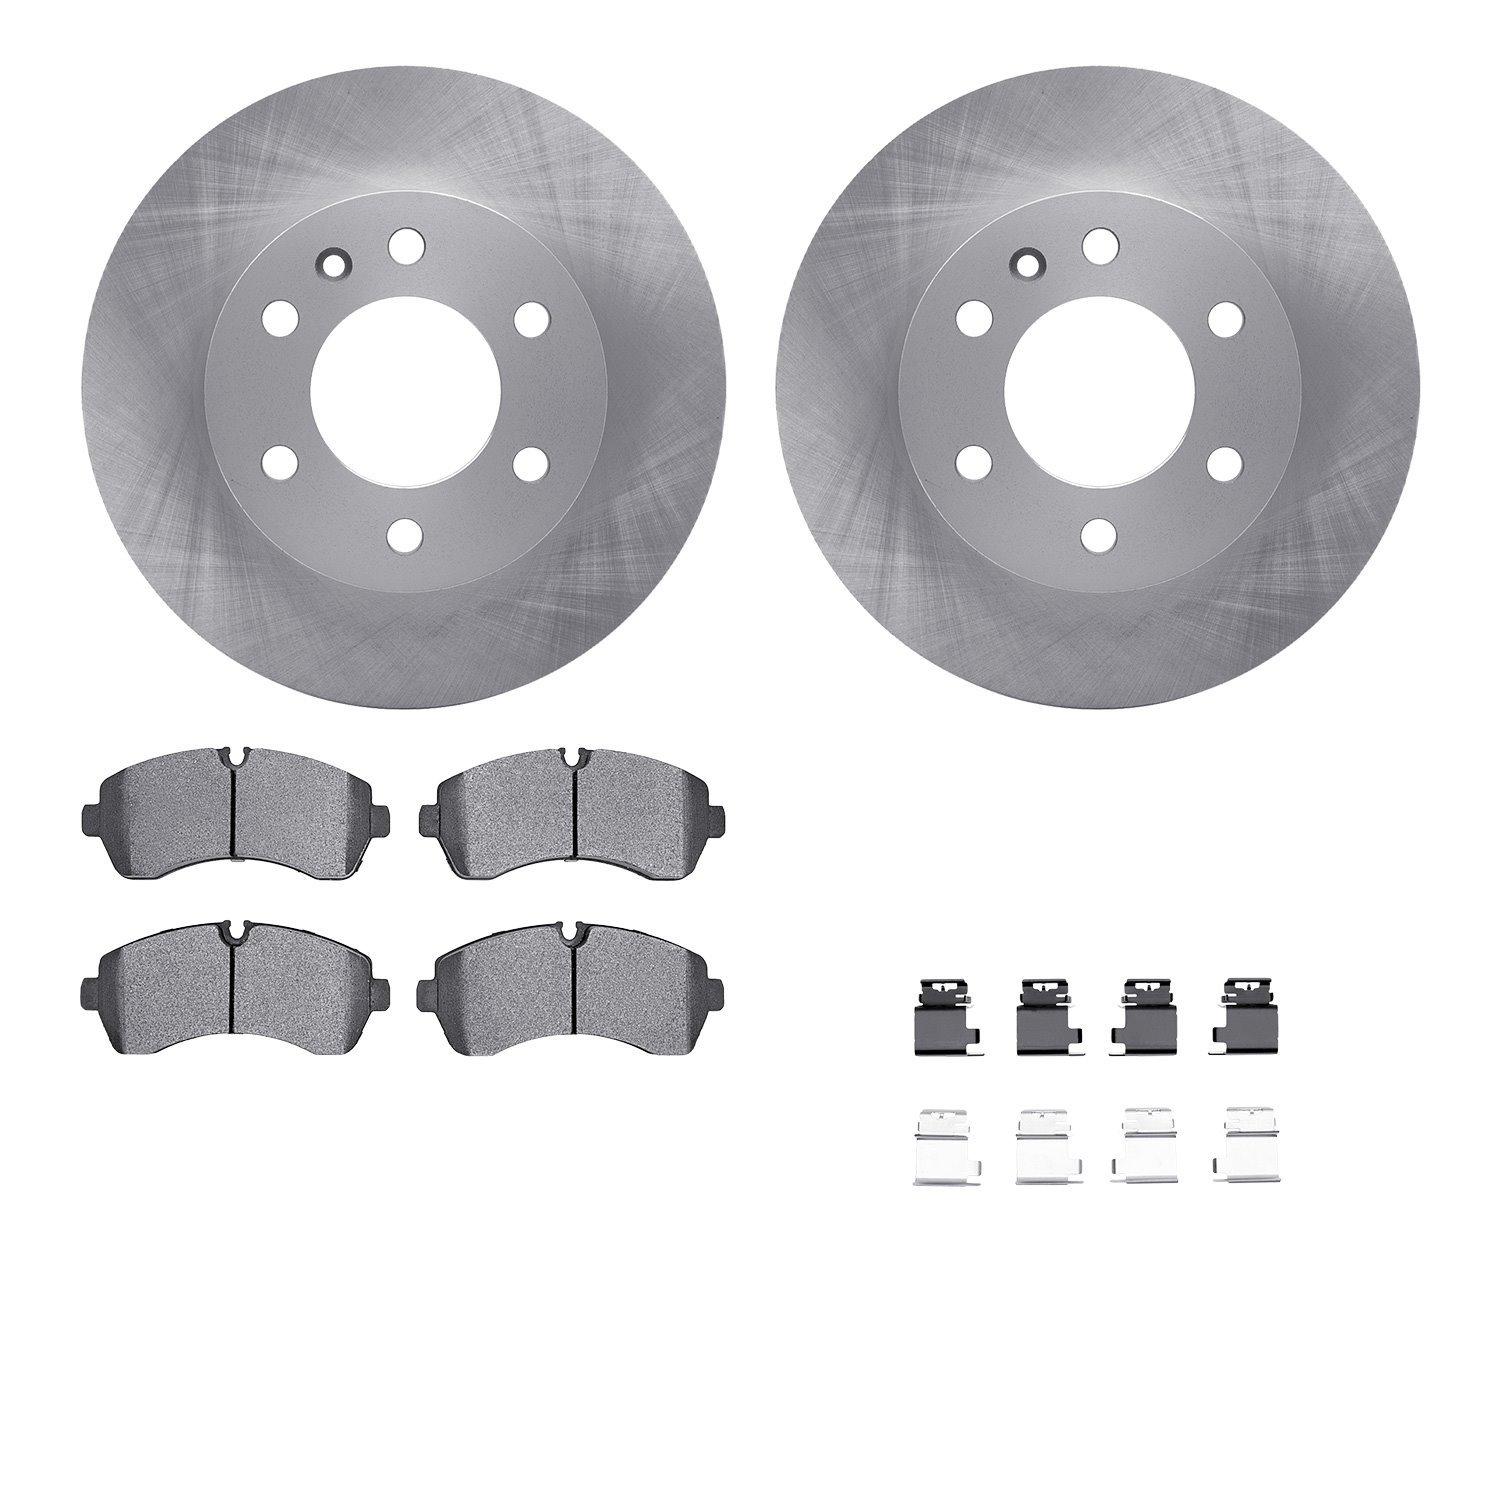 6212-40268 Brake Rotors w/Heavy-Duty Brake Pads Kit & Hardware, Fits Select Multiple Makes/Models, Position: Front